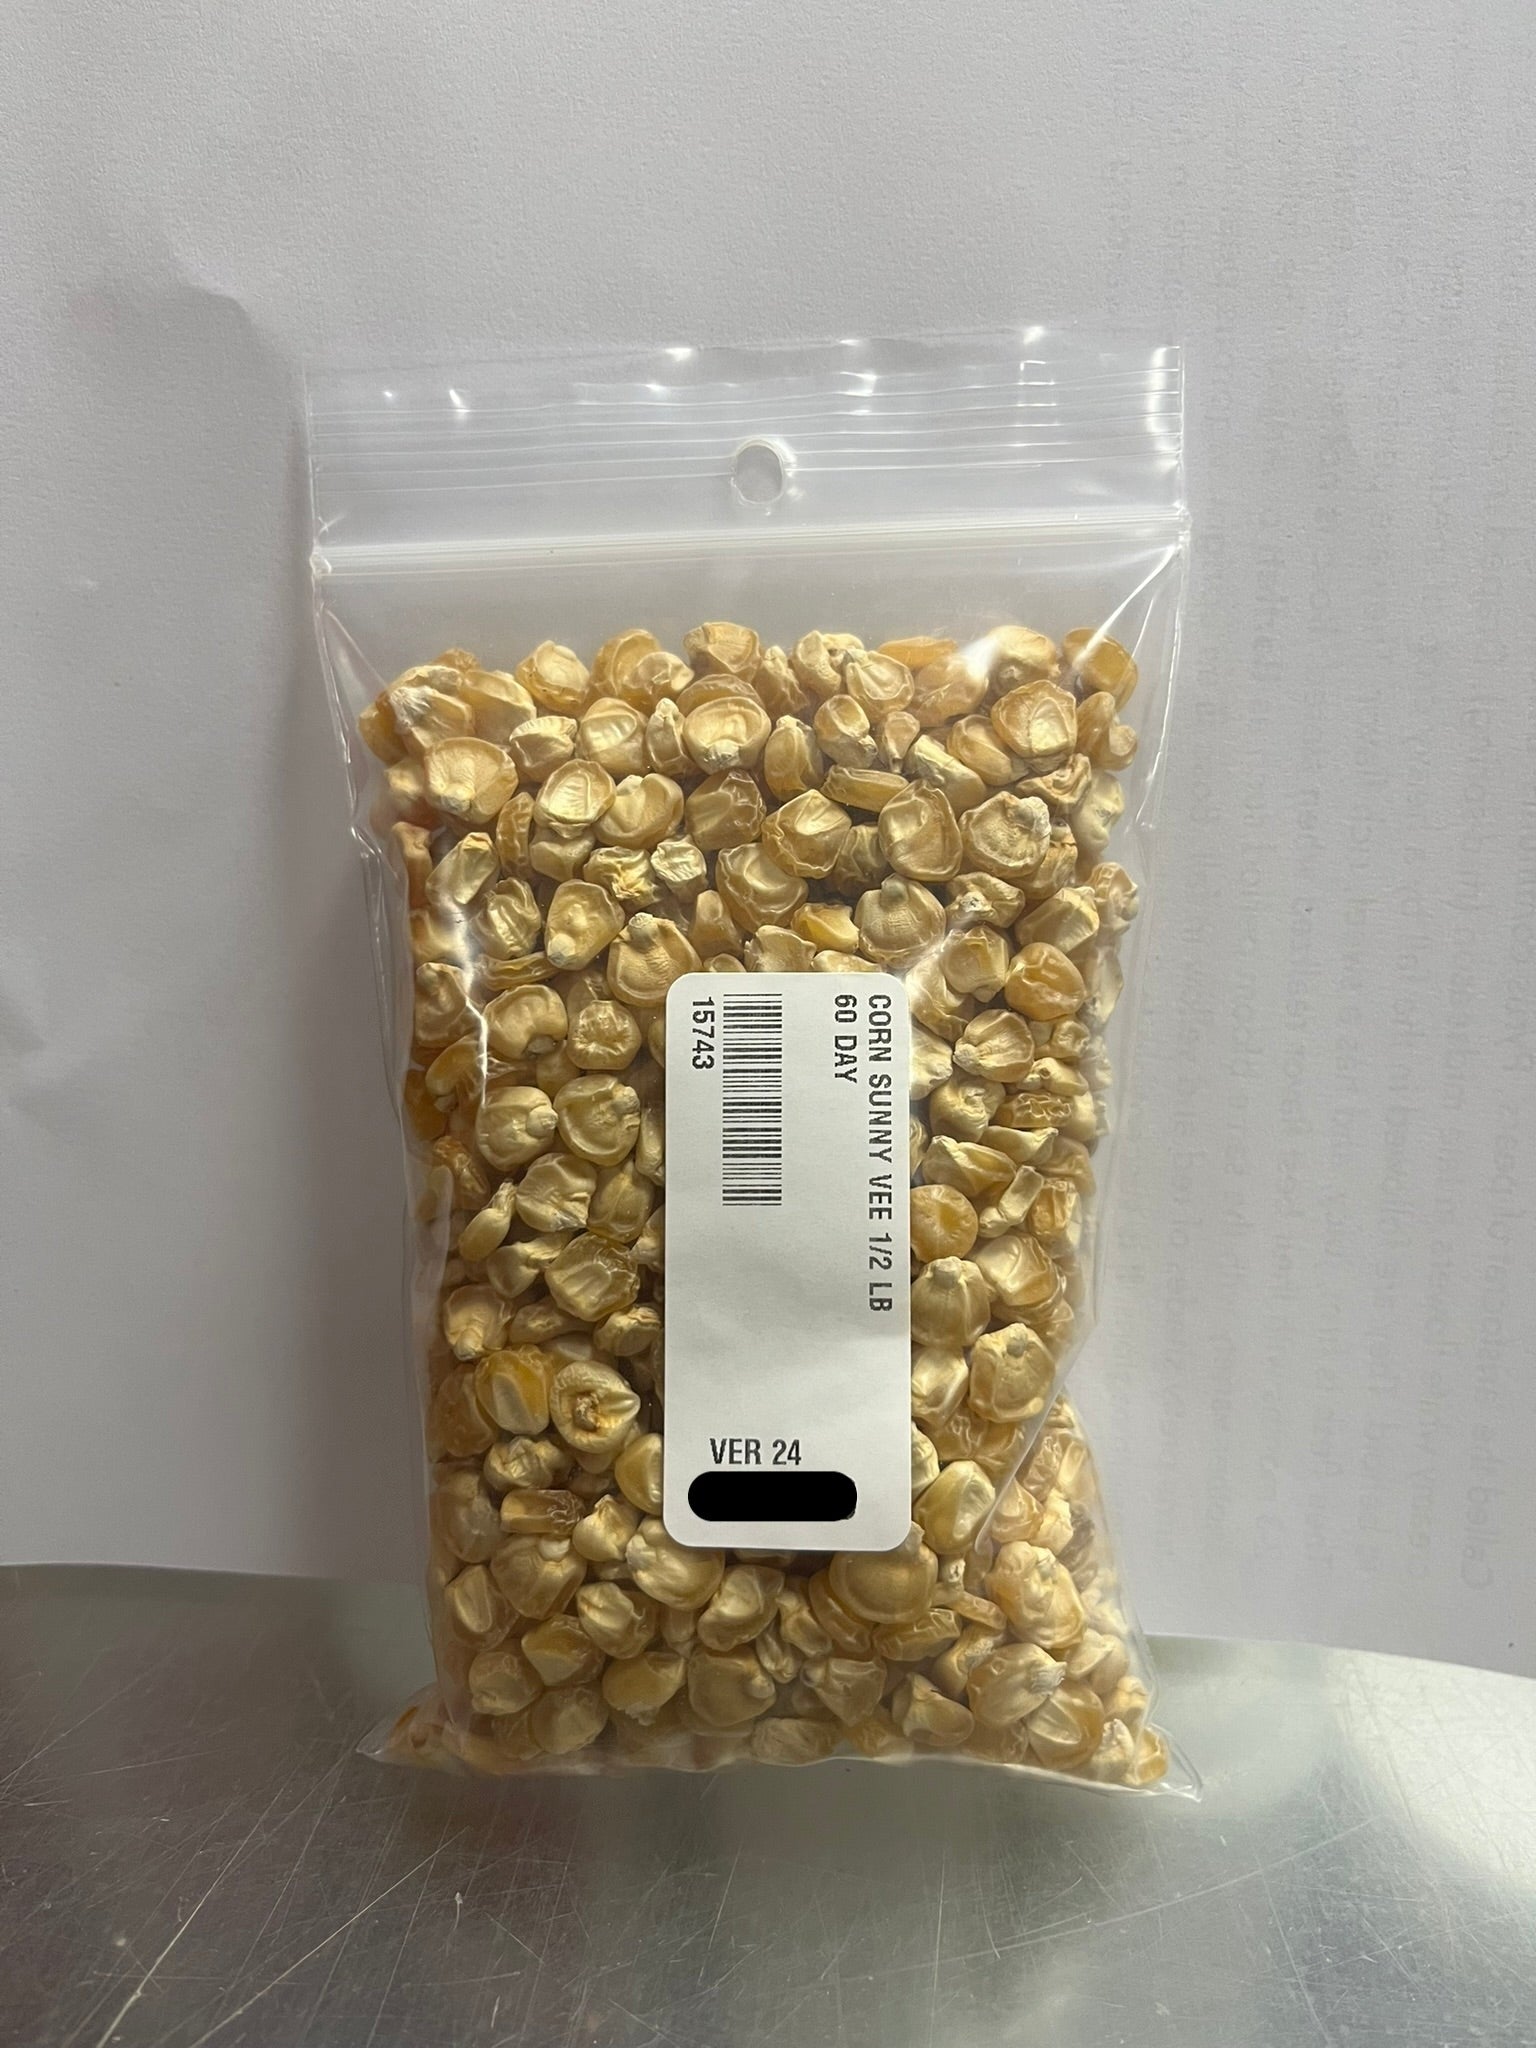 Sunnyvee Sweet Corn Seeds - 1/2lb - 60 Day